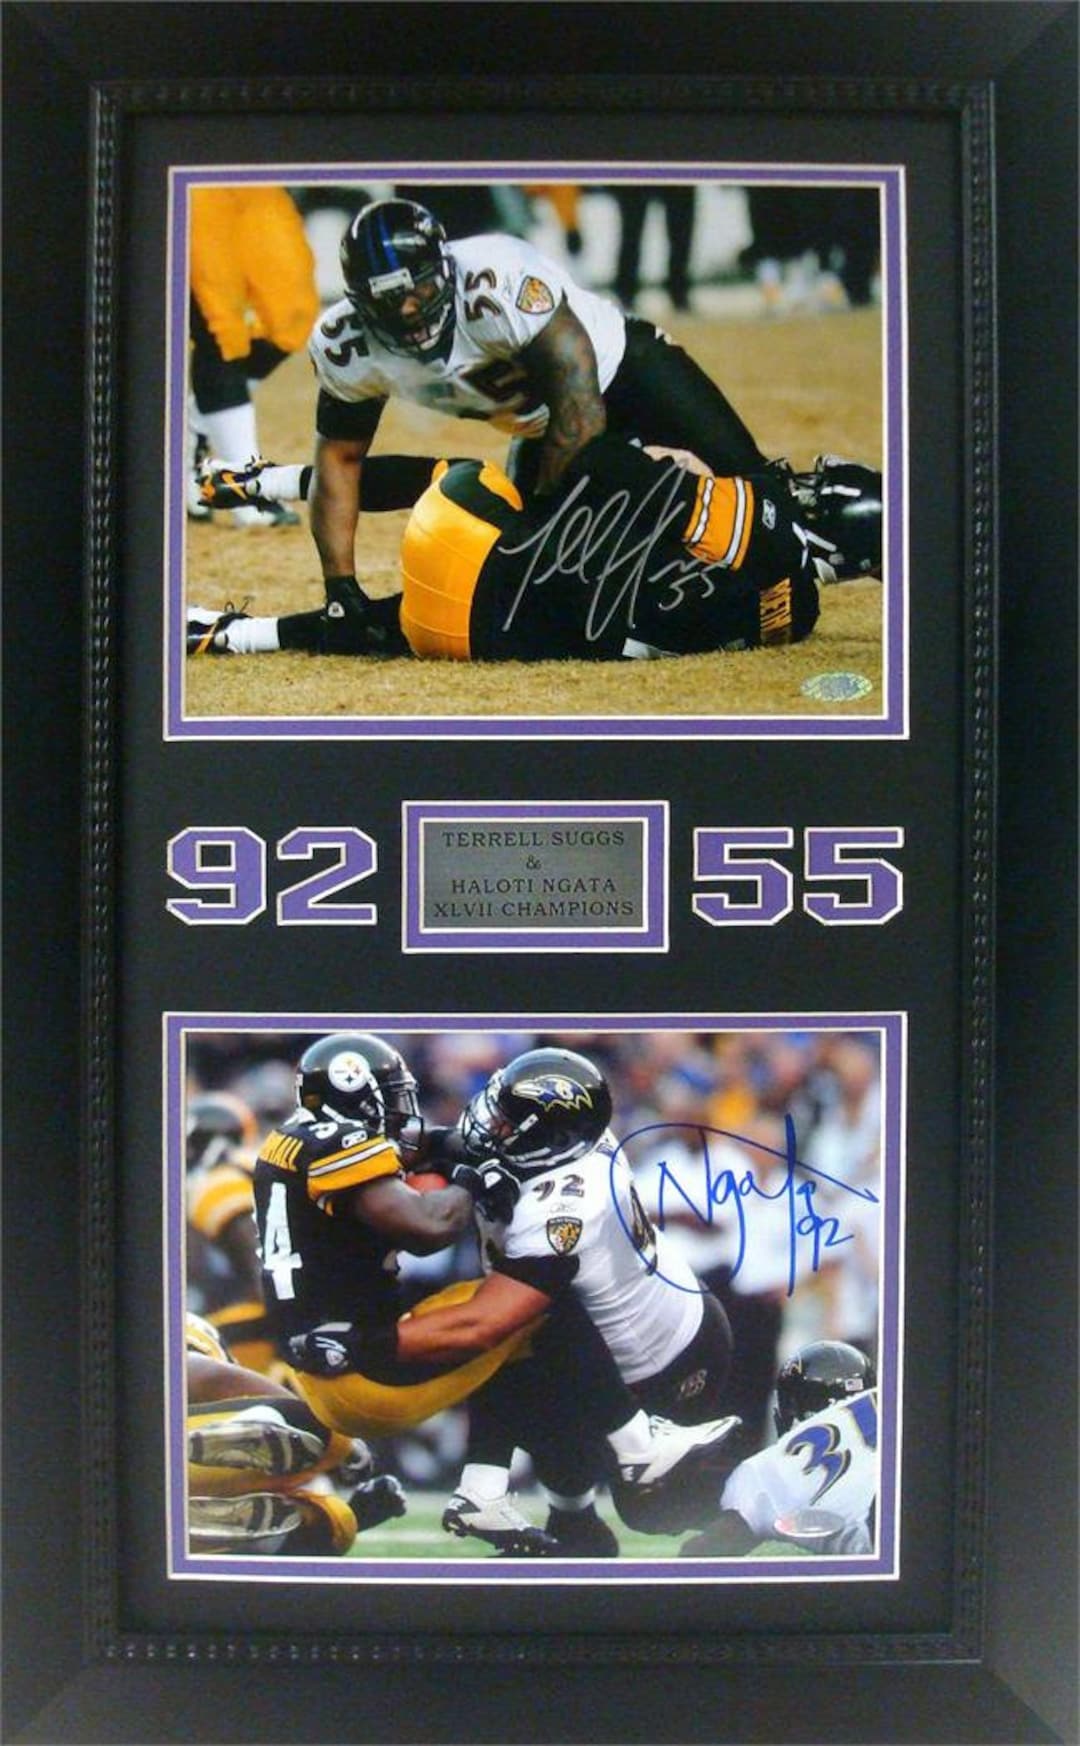 Terrell Suggs Autographed Mini Ravens Super Bowl XLVII Football